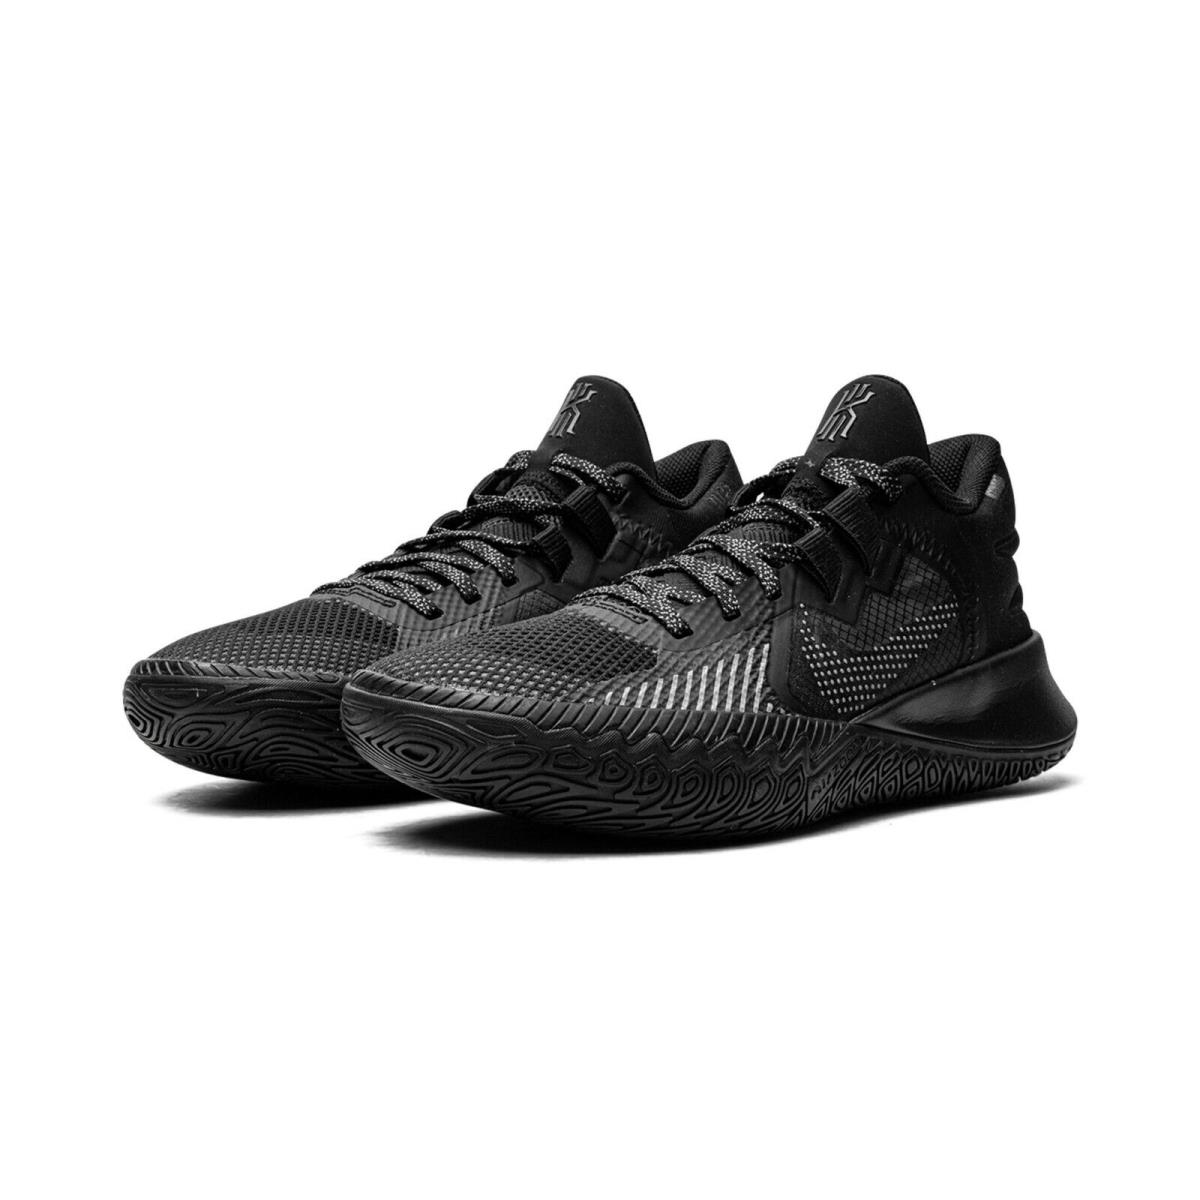 Nike Kyrie Flytrap V Men`s Basketball Shoes Black CZ4100-004 - Black